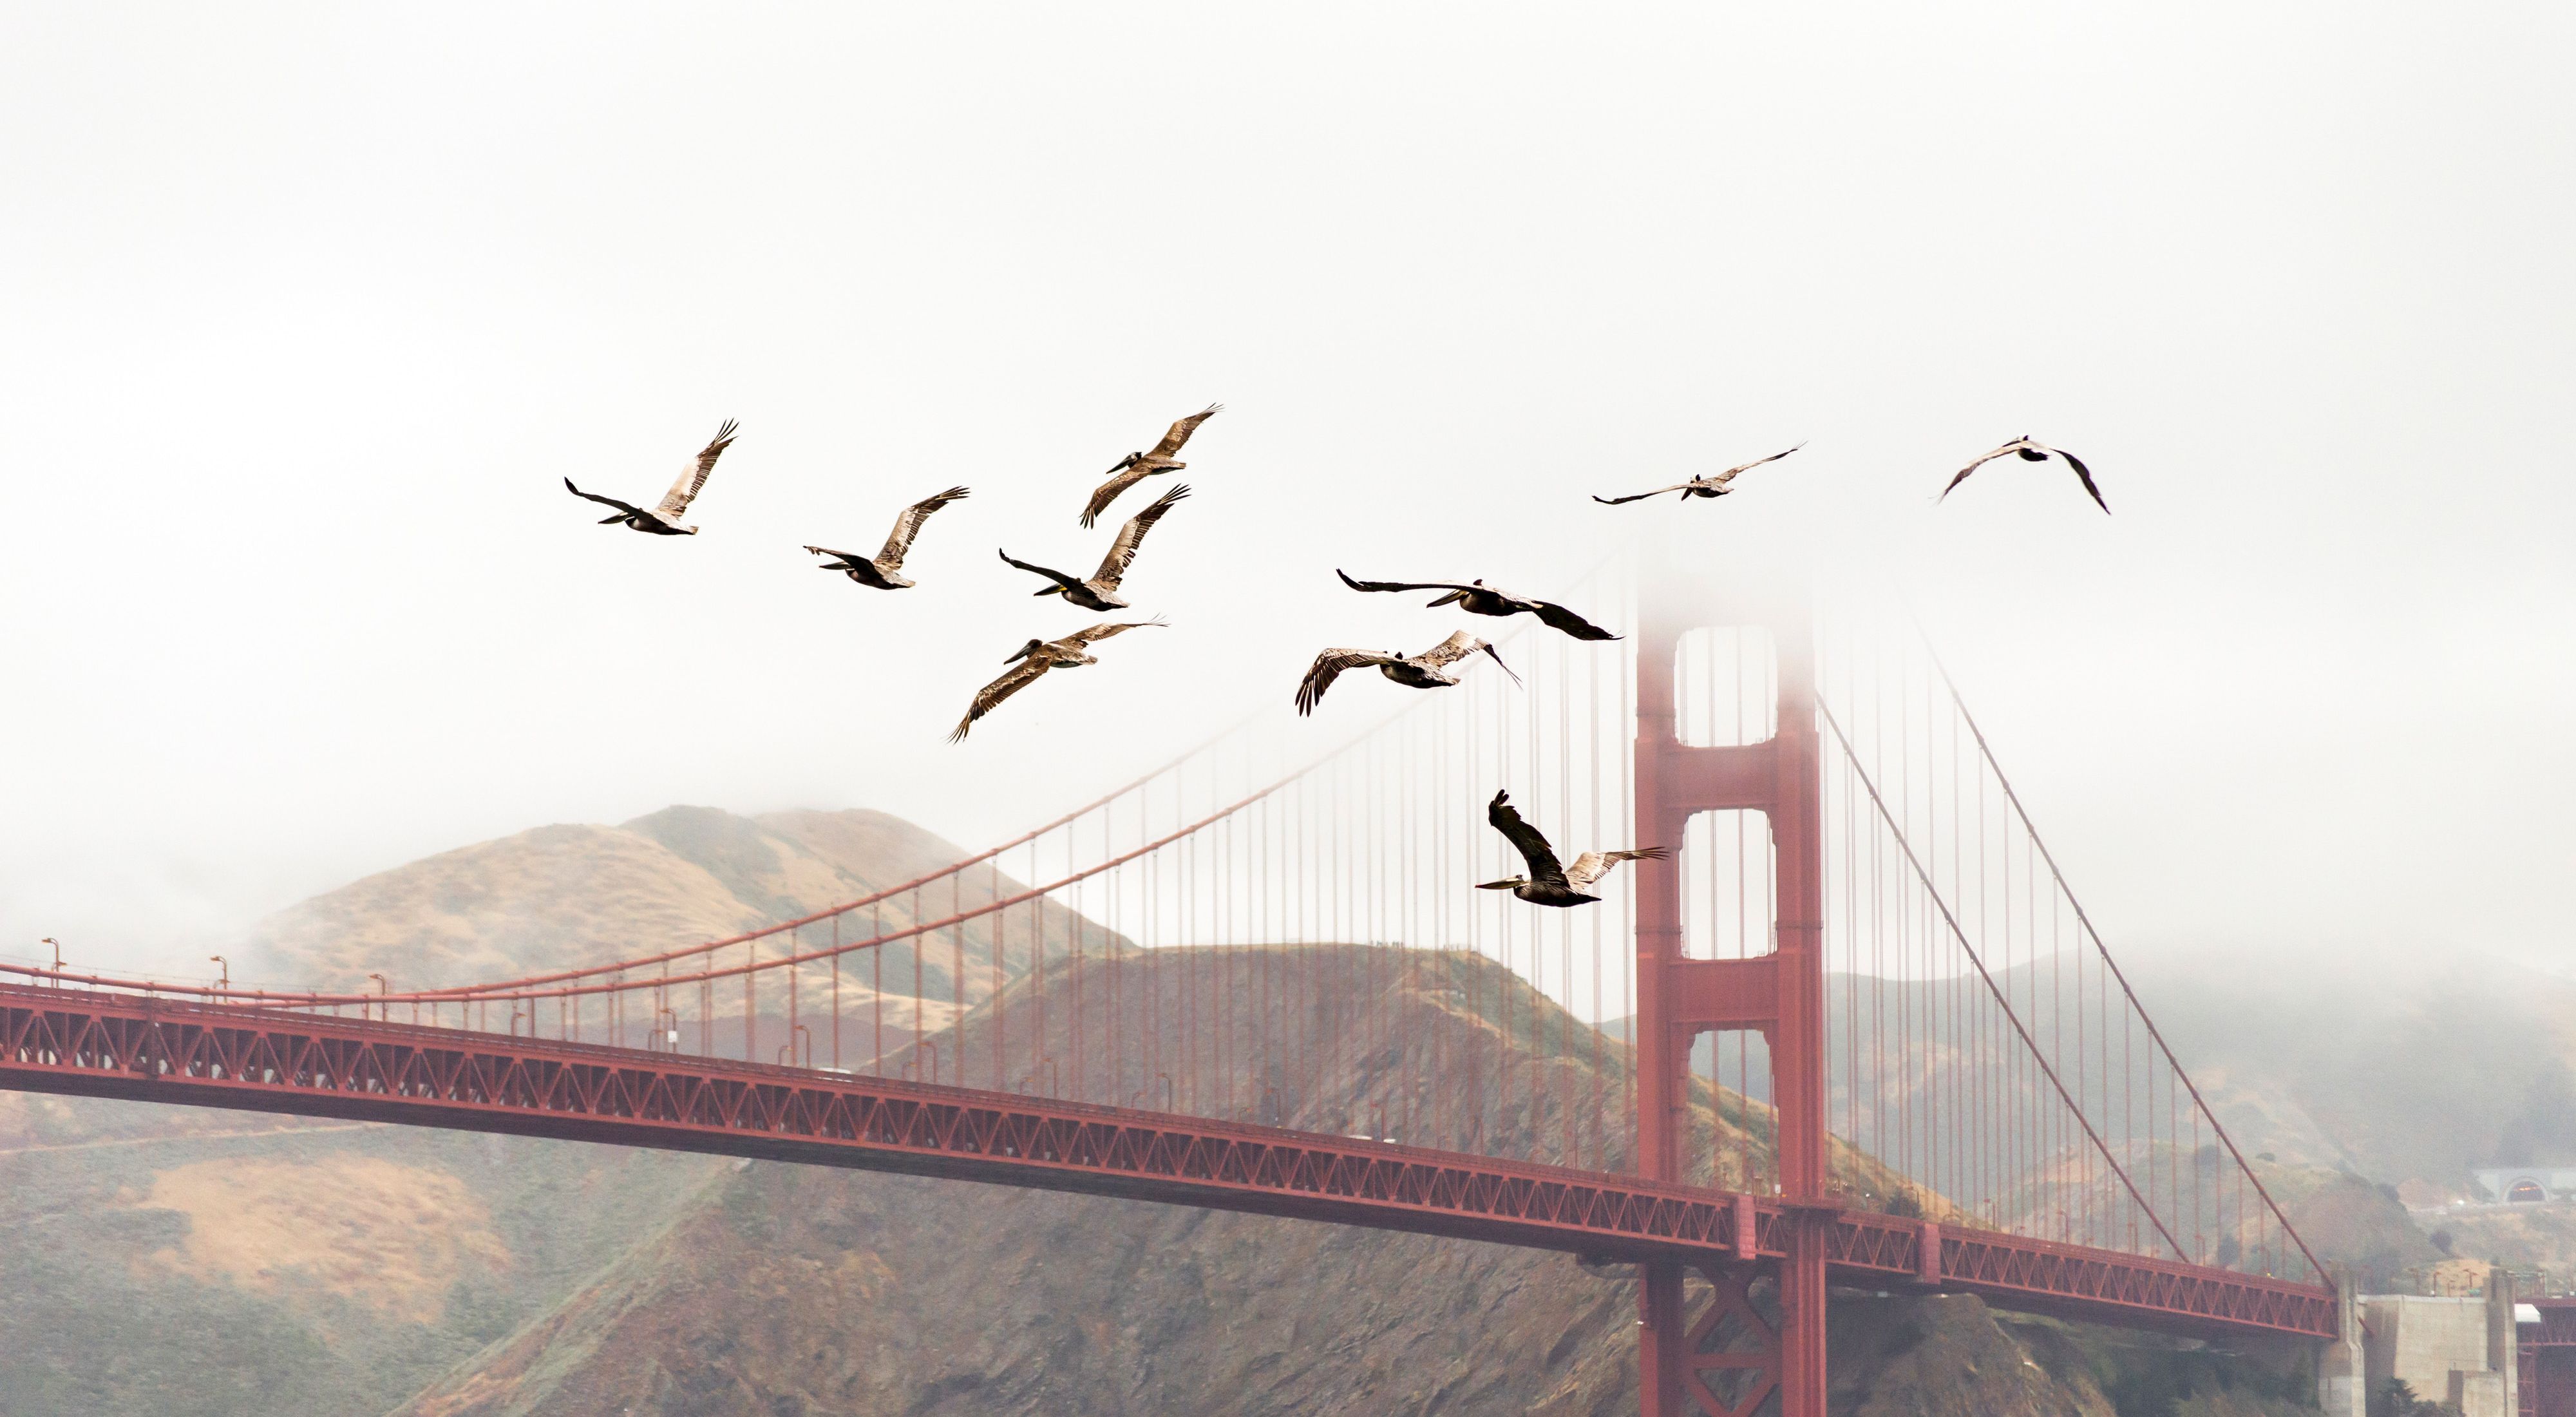 Birds fly past the Golden Gate Bridge